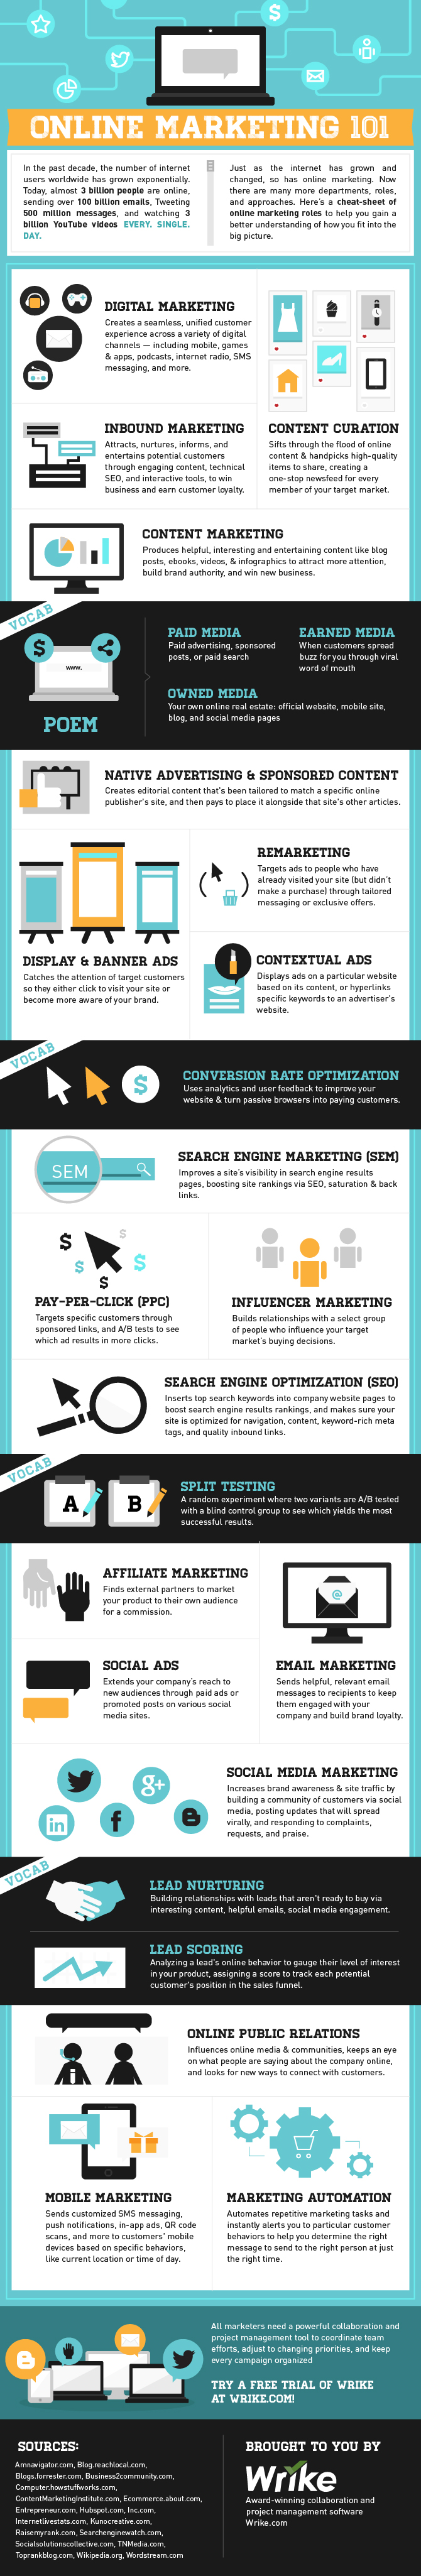 Online Marketing 101 #infographic